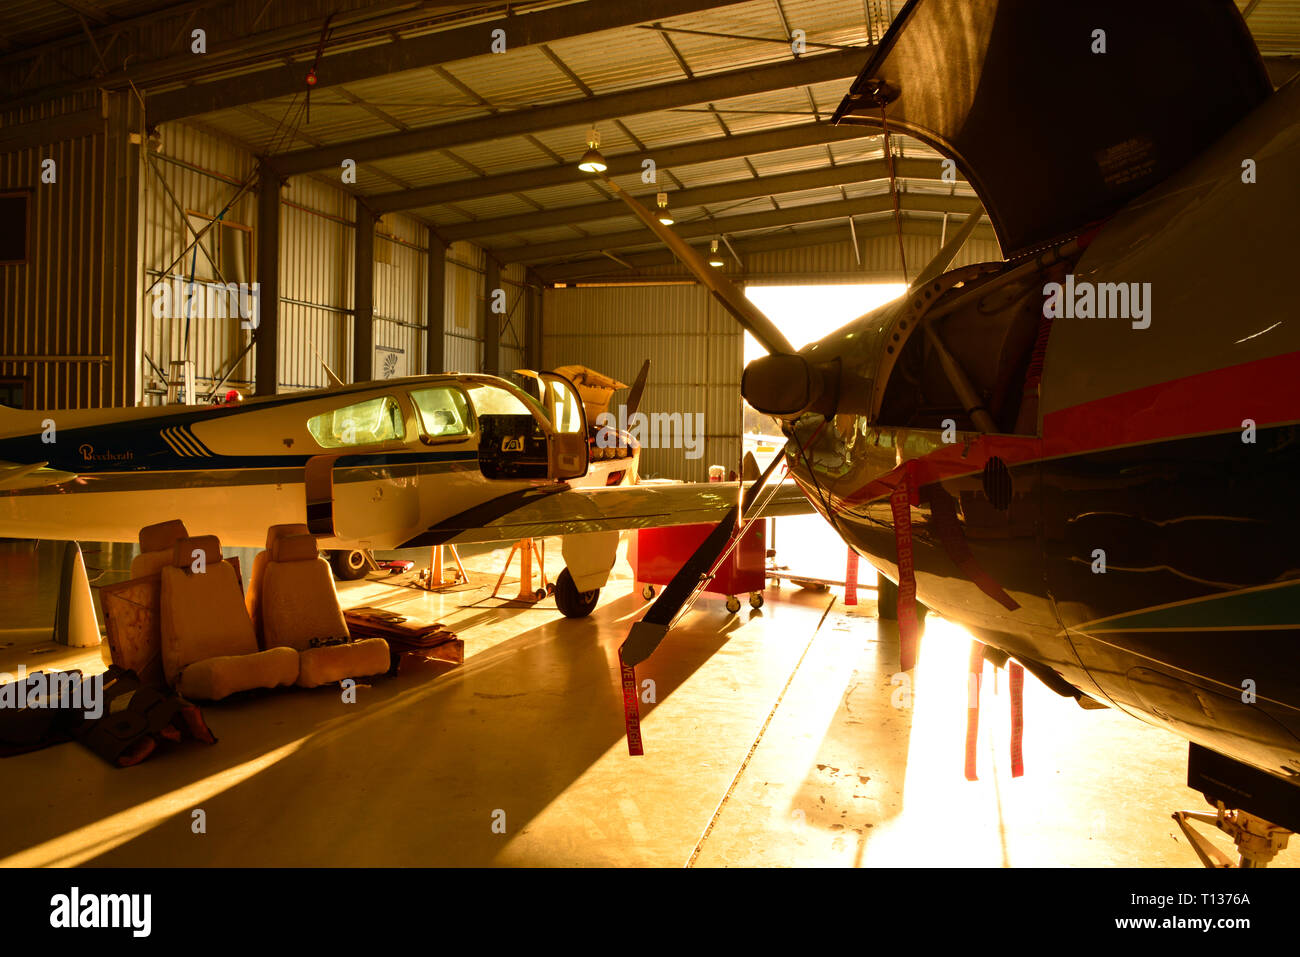 Aircraft maintenance hangar with sunlight illuminating the building interior. Stock Photo